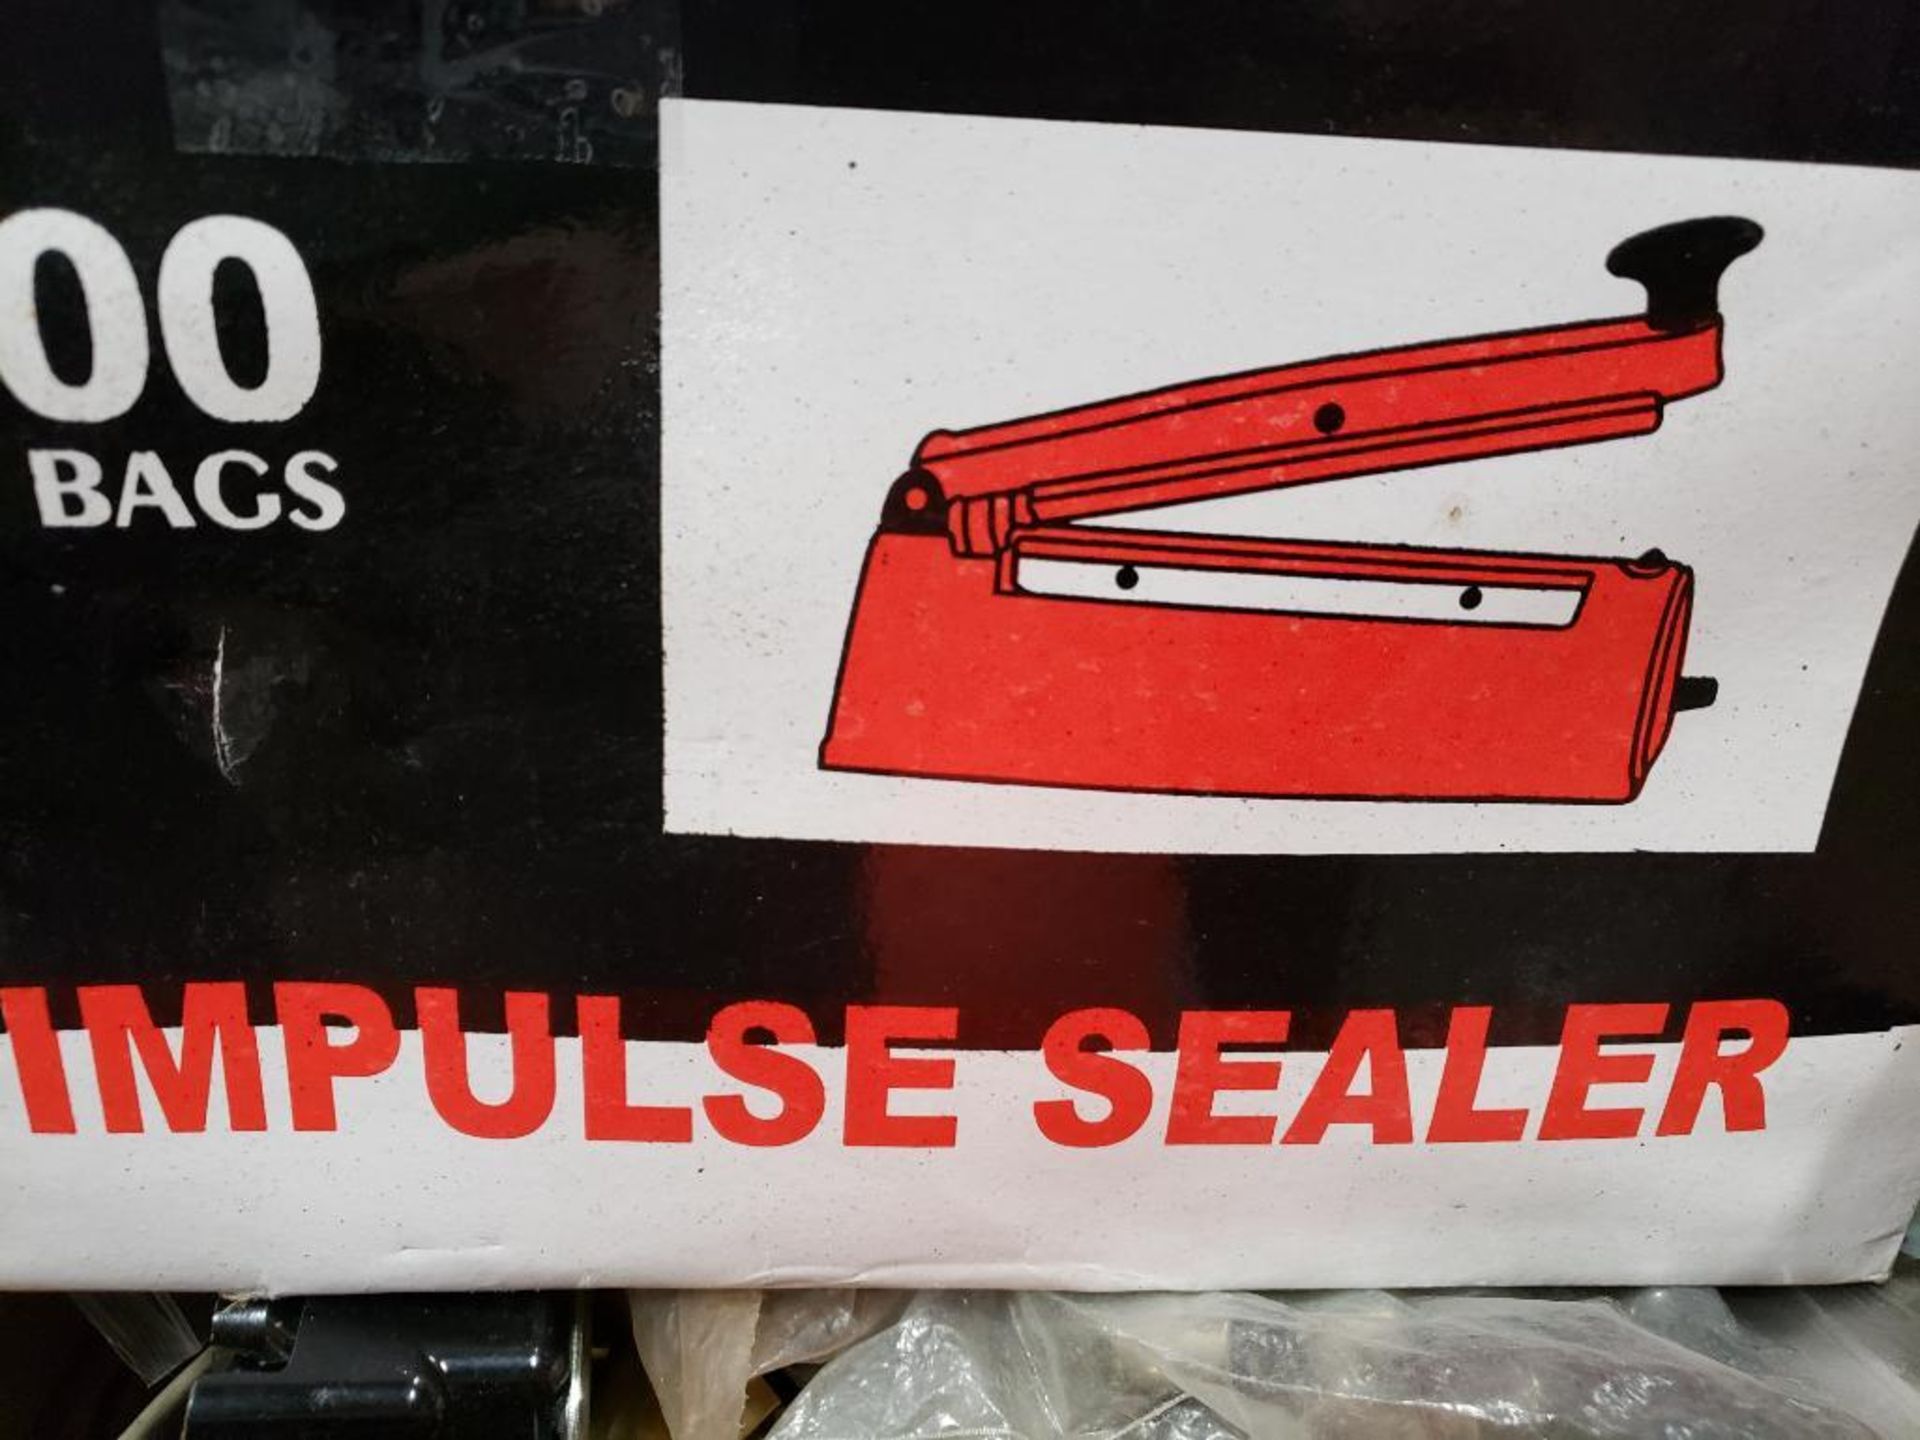 Impulses sealer FS-200 for PP/PE bags. New in box. - Image 3 of 4